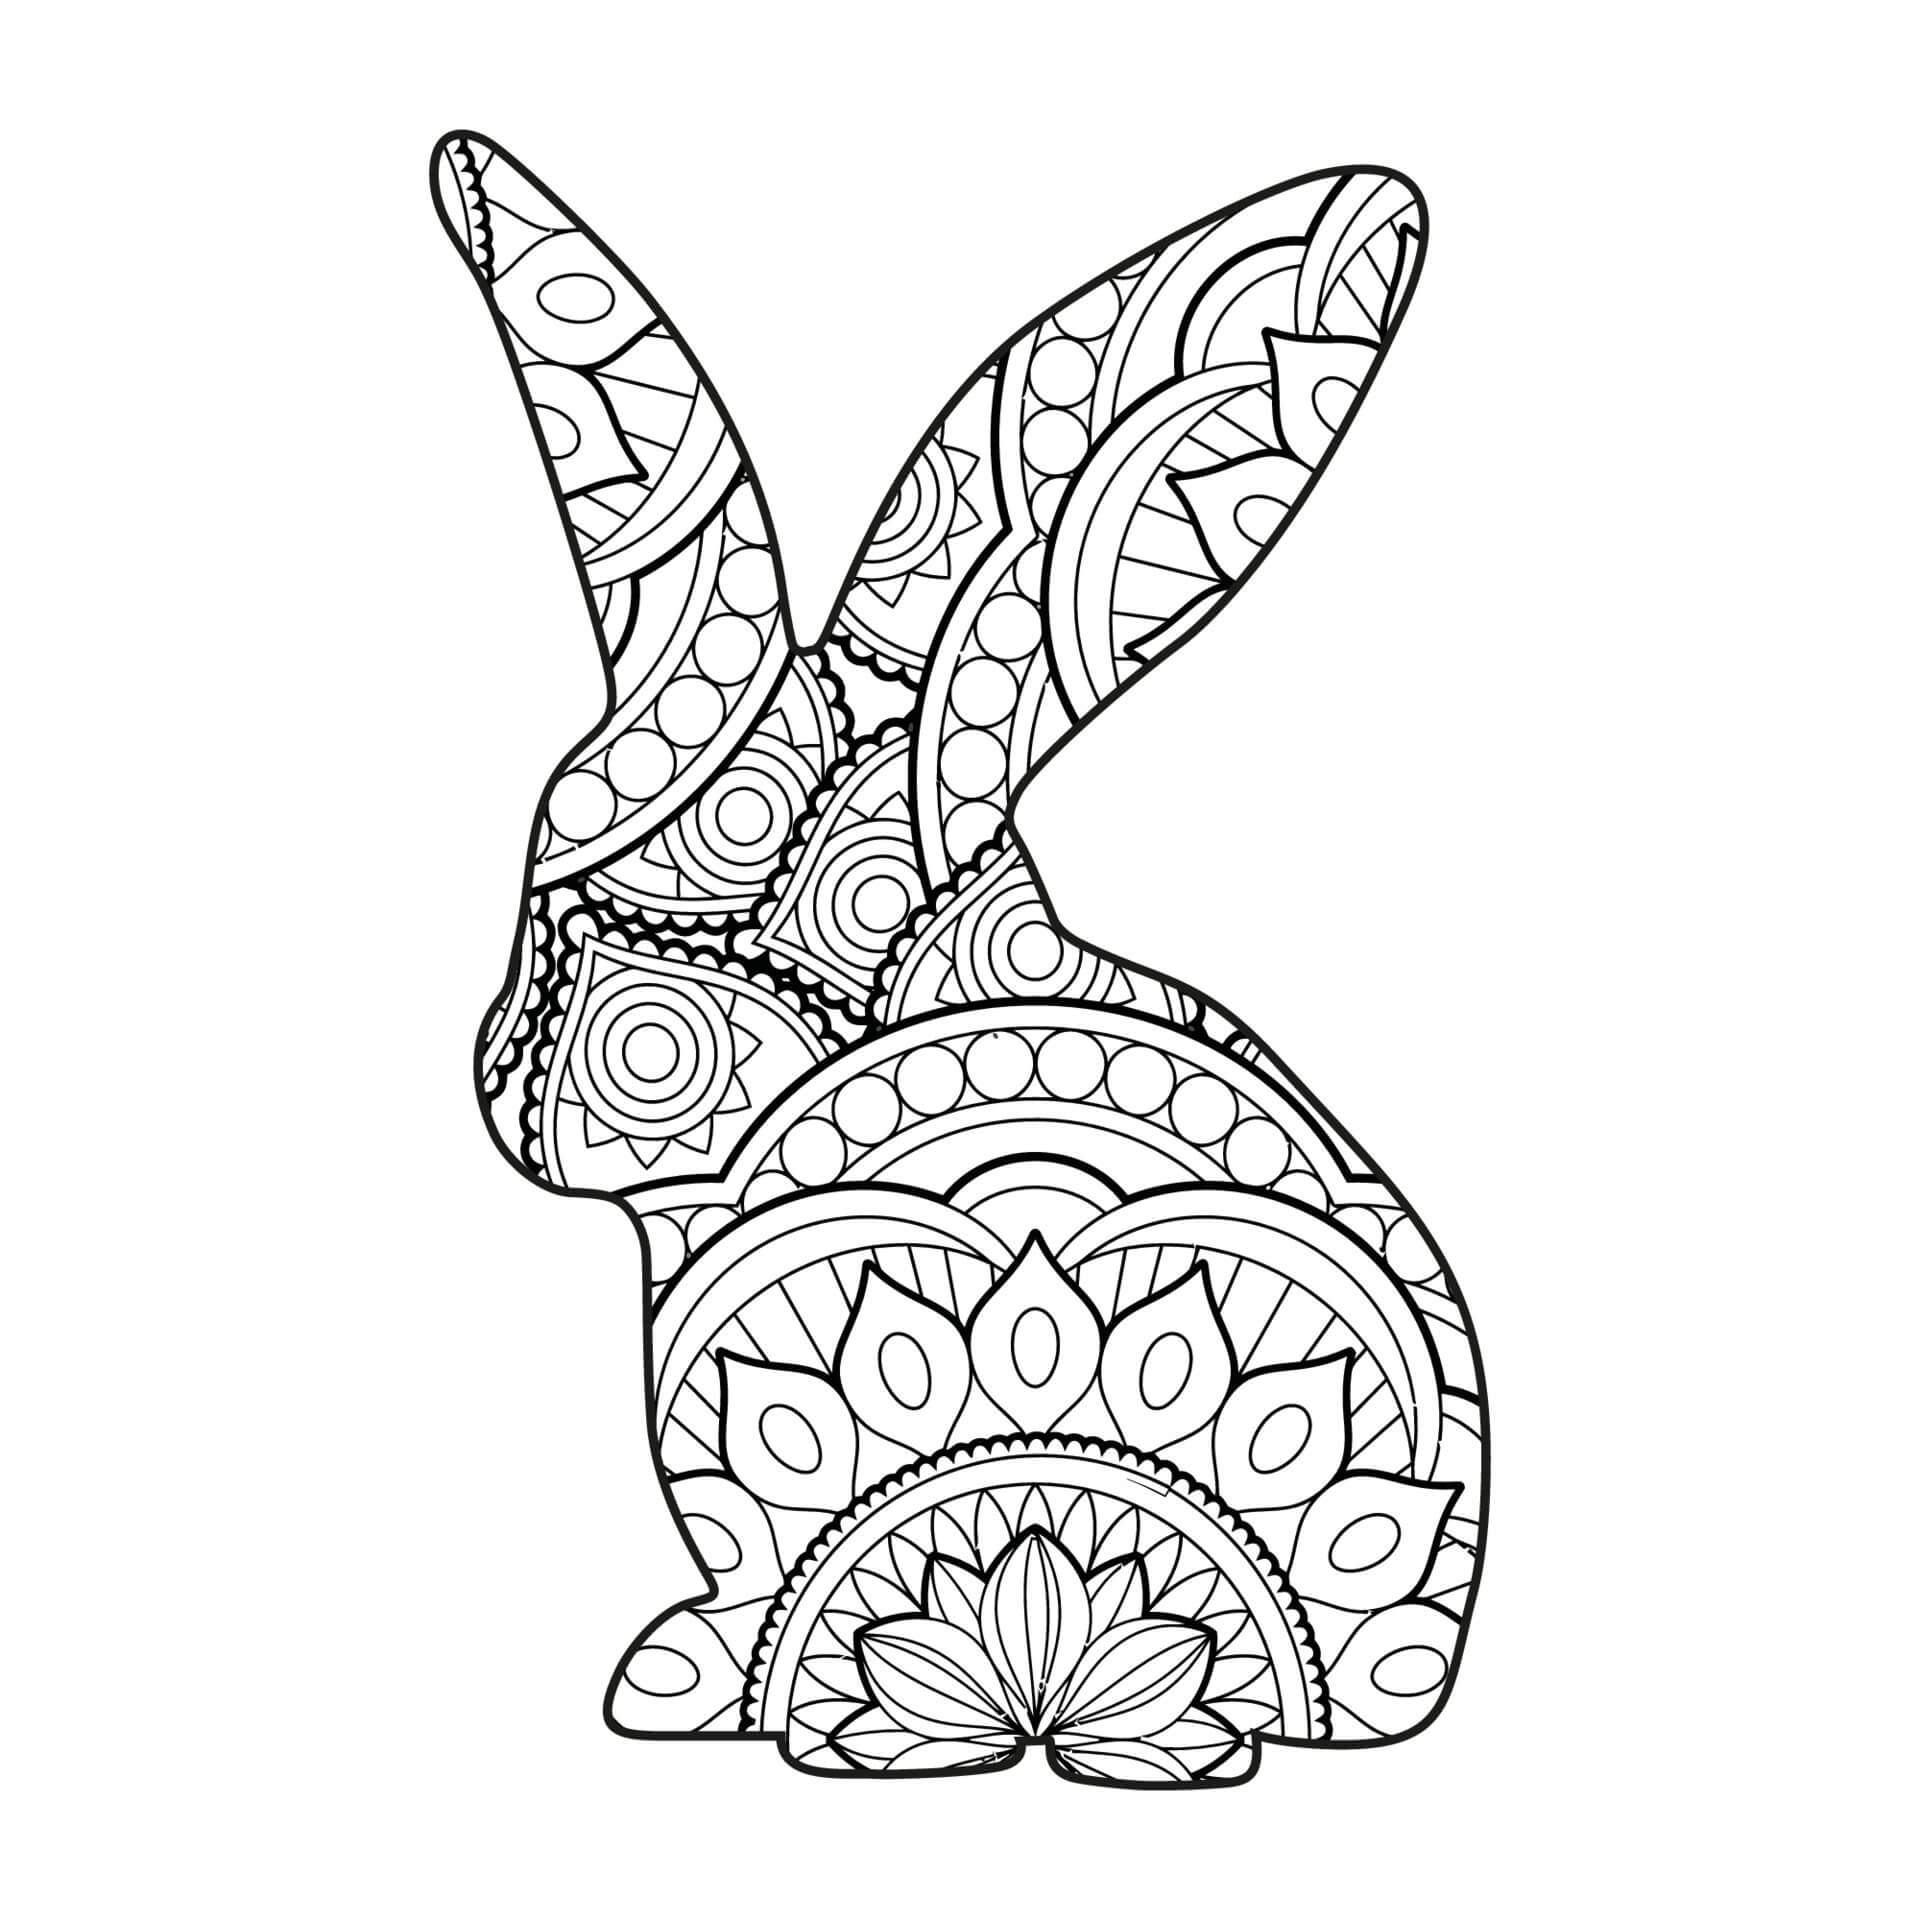 Mandala Rabbit Coloring Page - Sheet 1 Mandalas